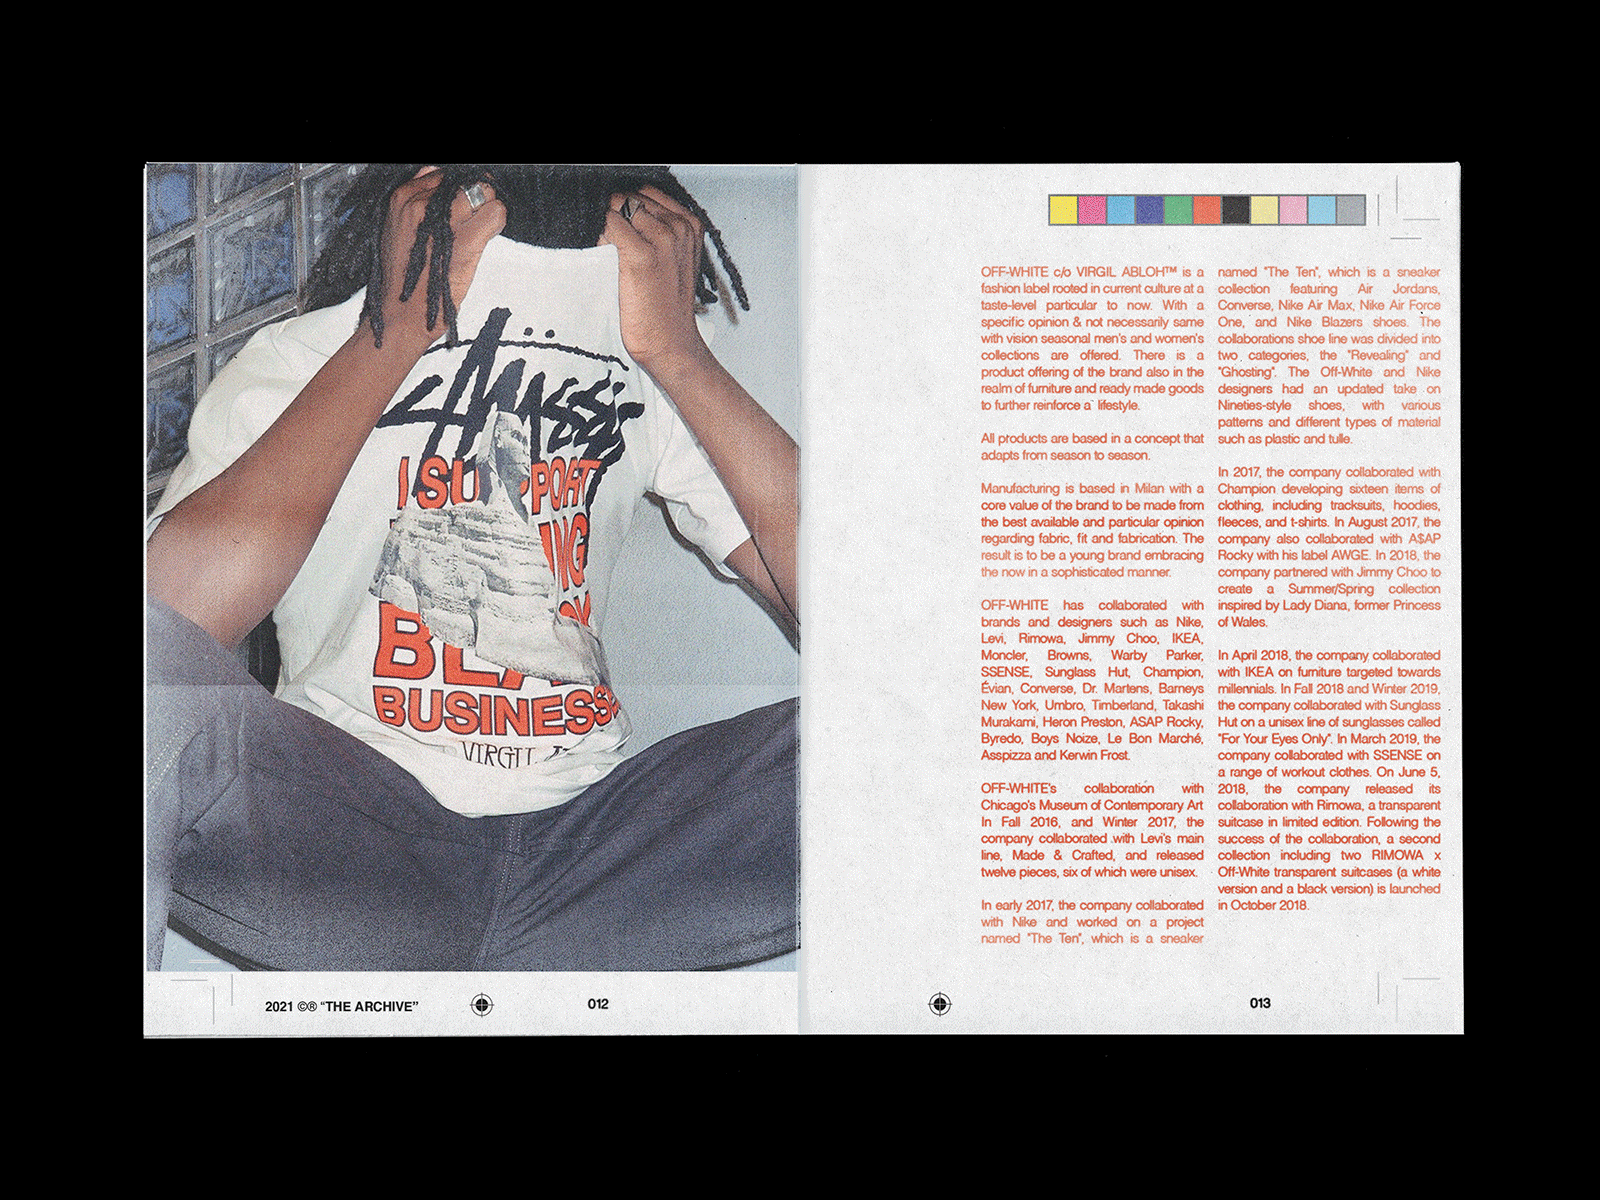 Wallpaper* magazine - Navigate the design world with Virgil Abloh